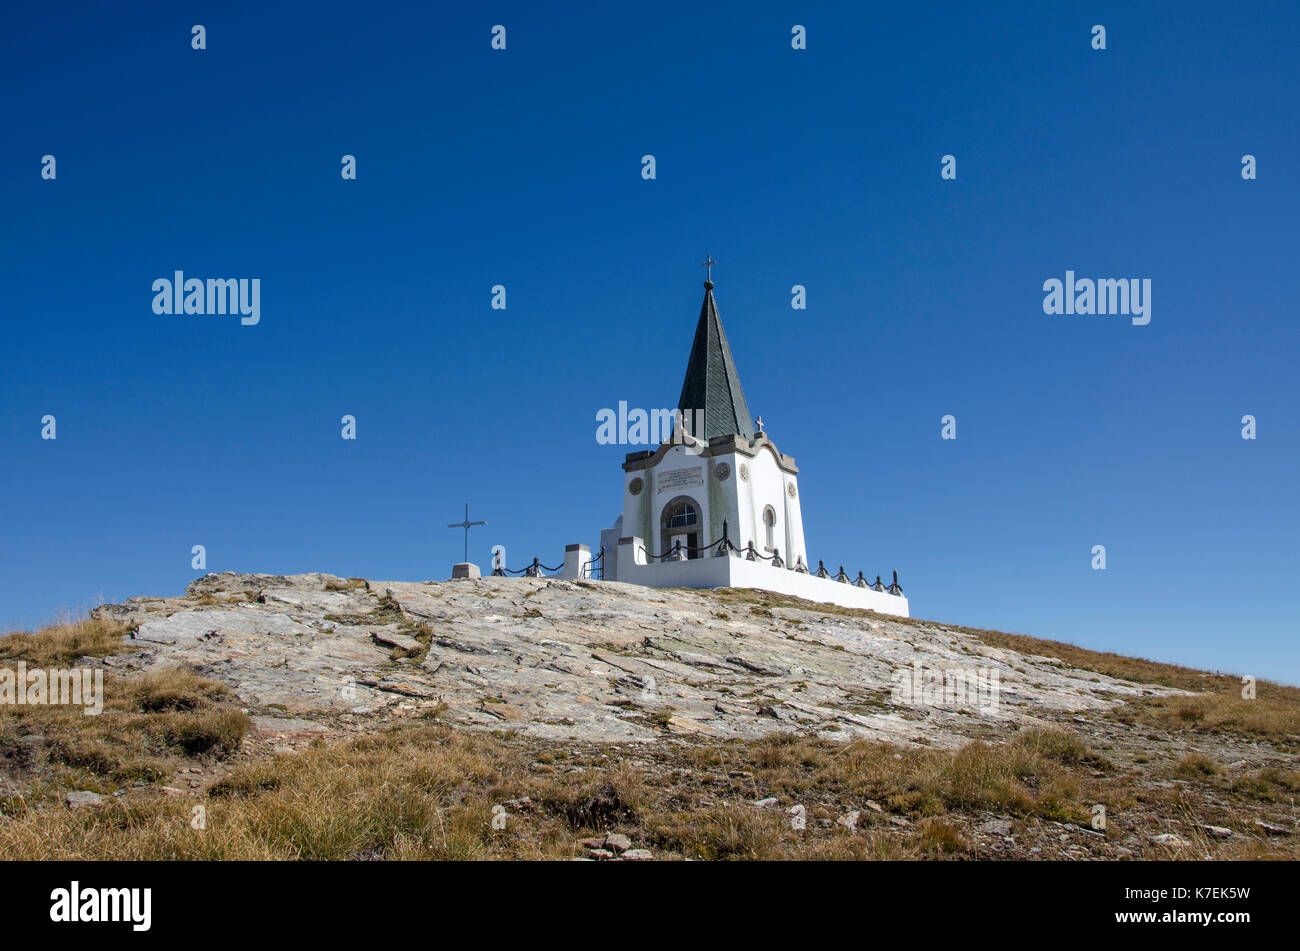 Kajmakcalan Kapelle - WW 1 Lage - Mazedonien - Griechenland Grenze Stockfoto